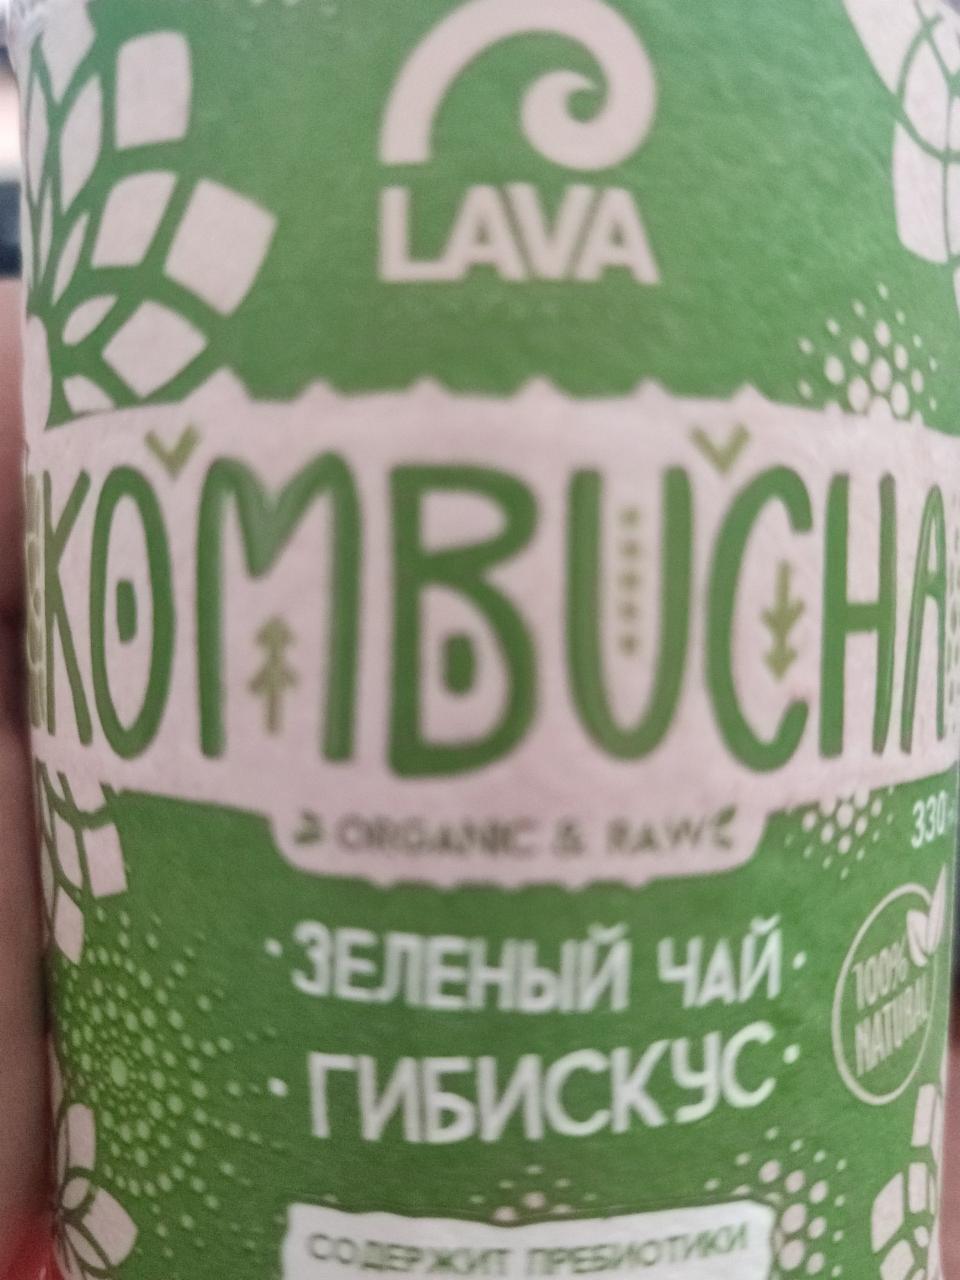 Фото - зелёный чай гибискус Kombucha lava